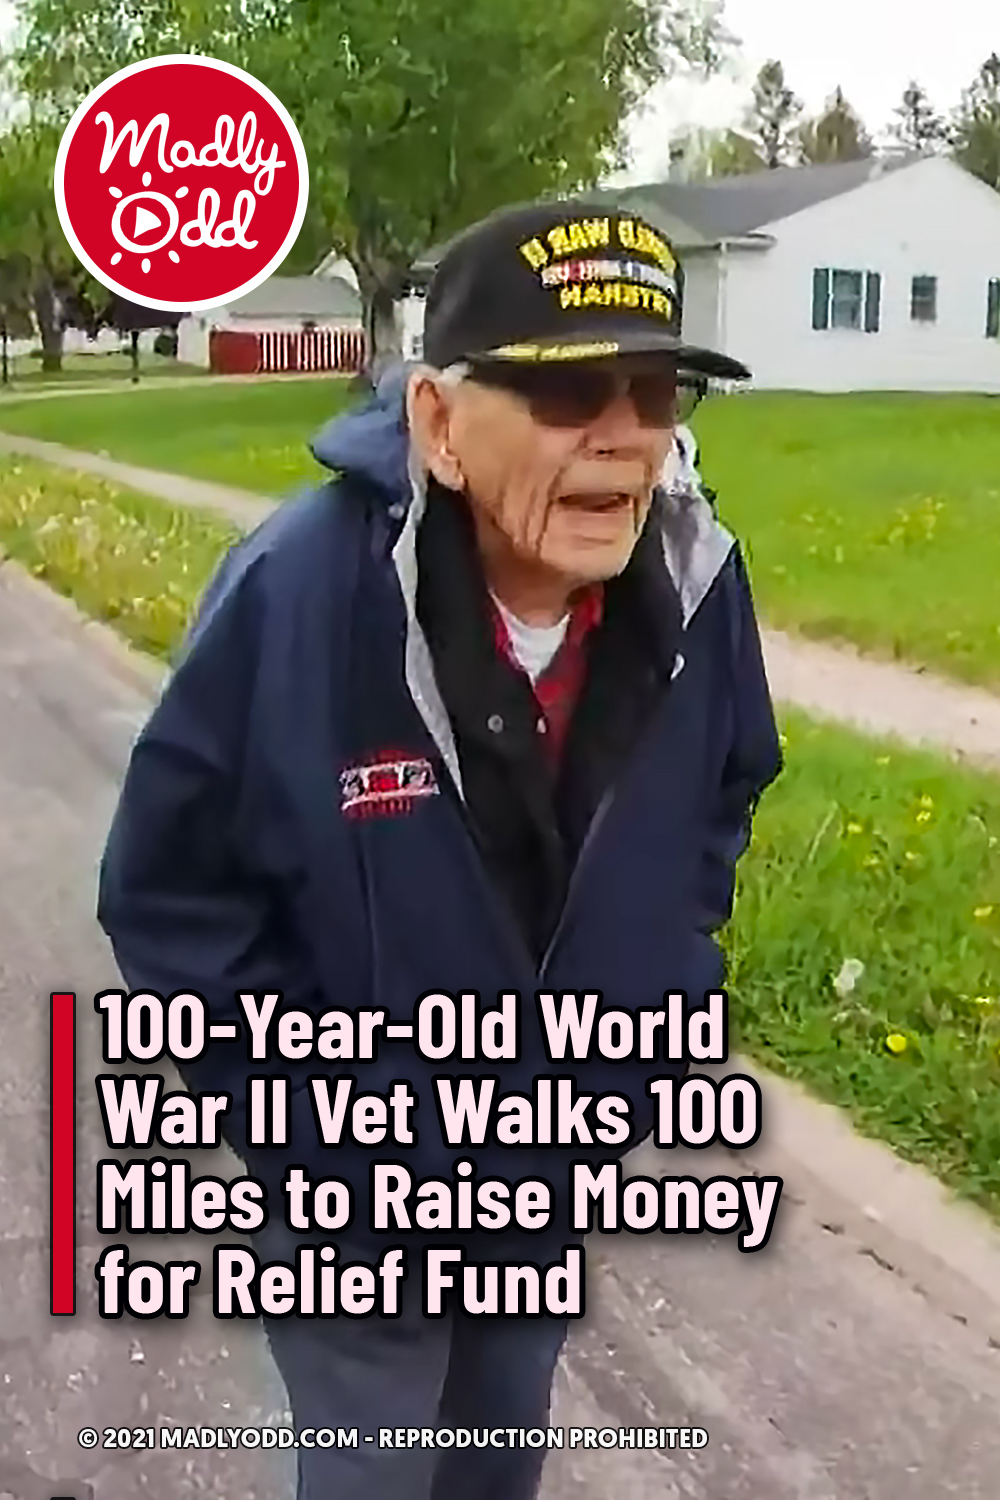 100-Year-Old World War II Vet Walks 100 Miles to Raise Money for Relief Fund